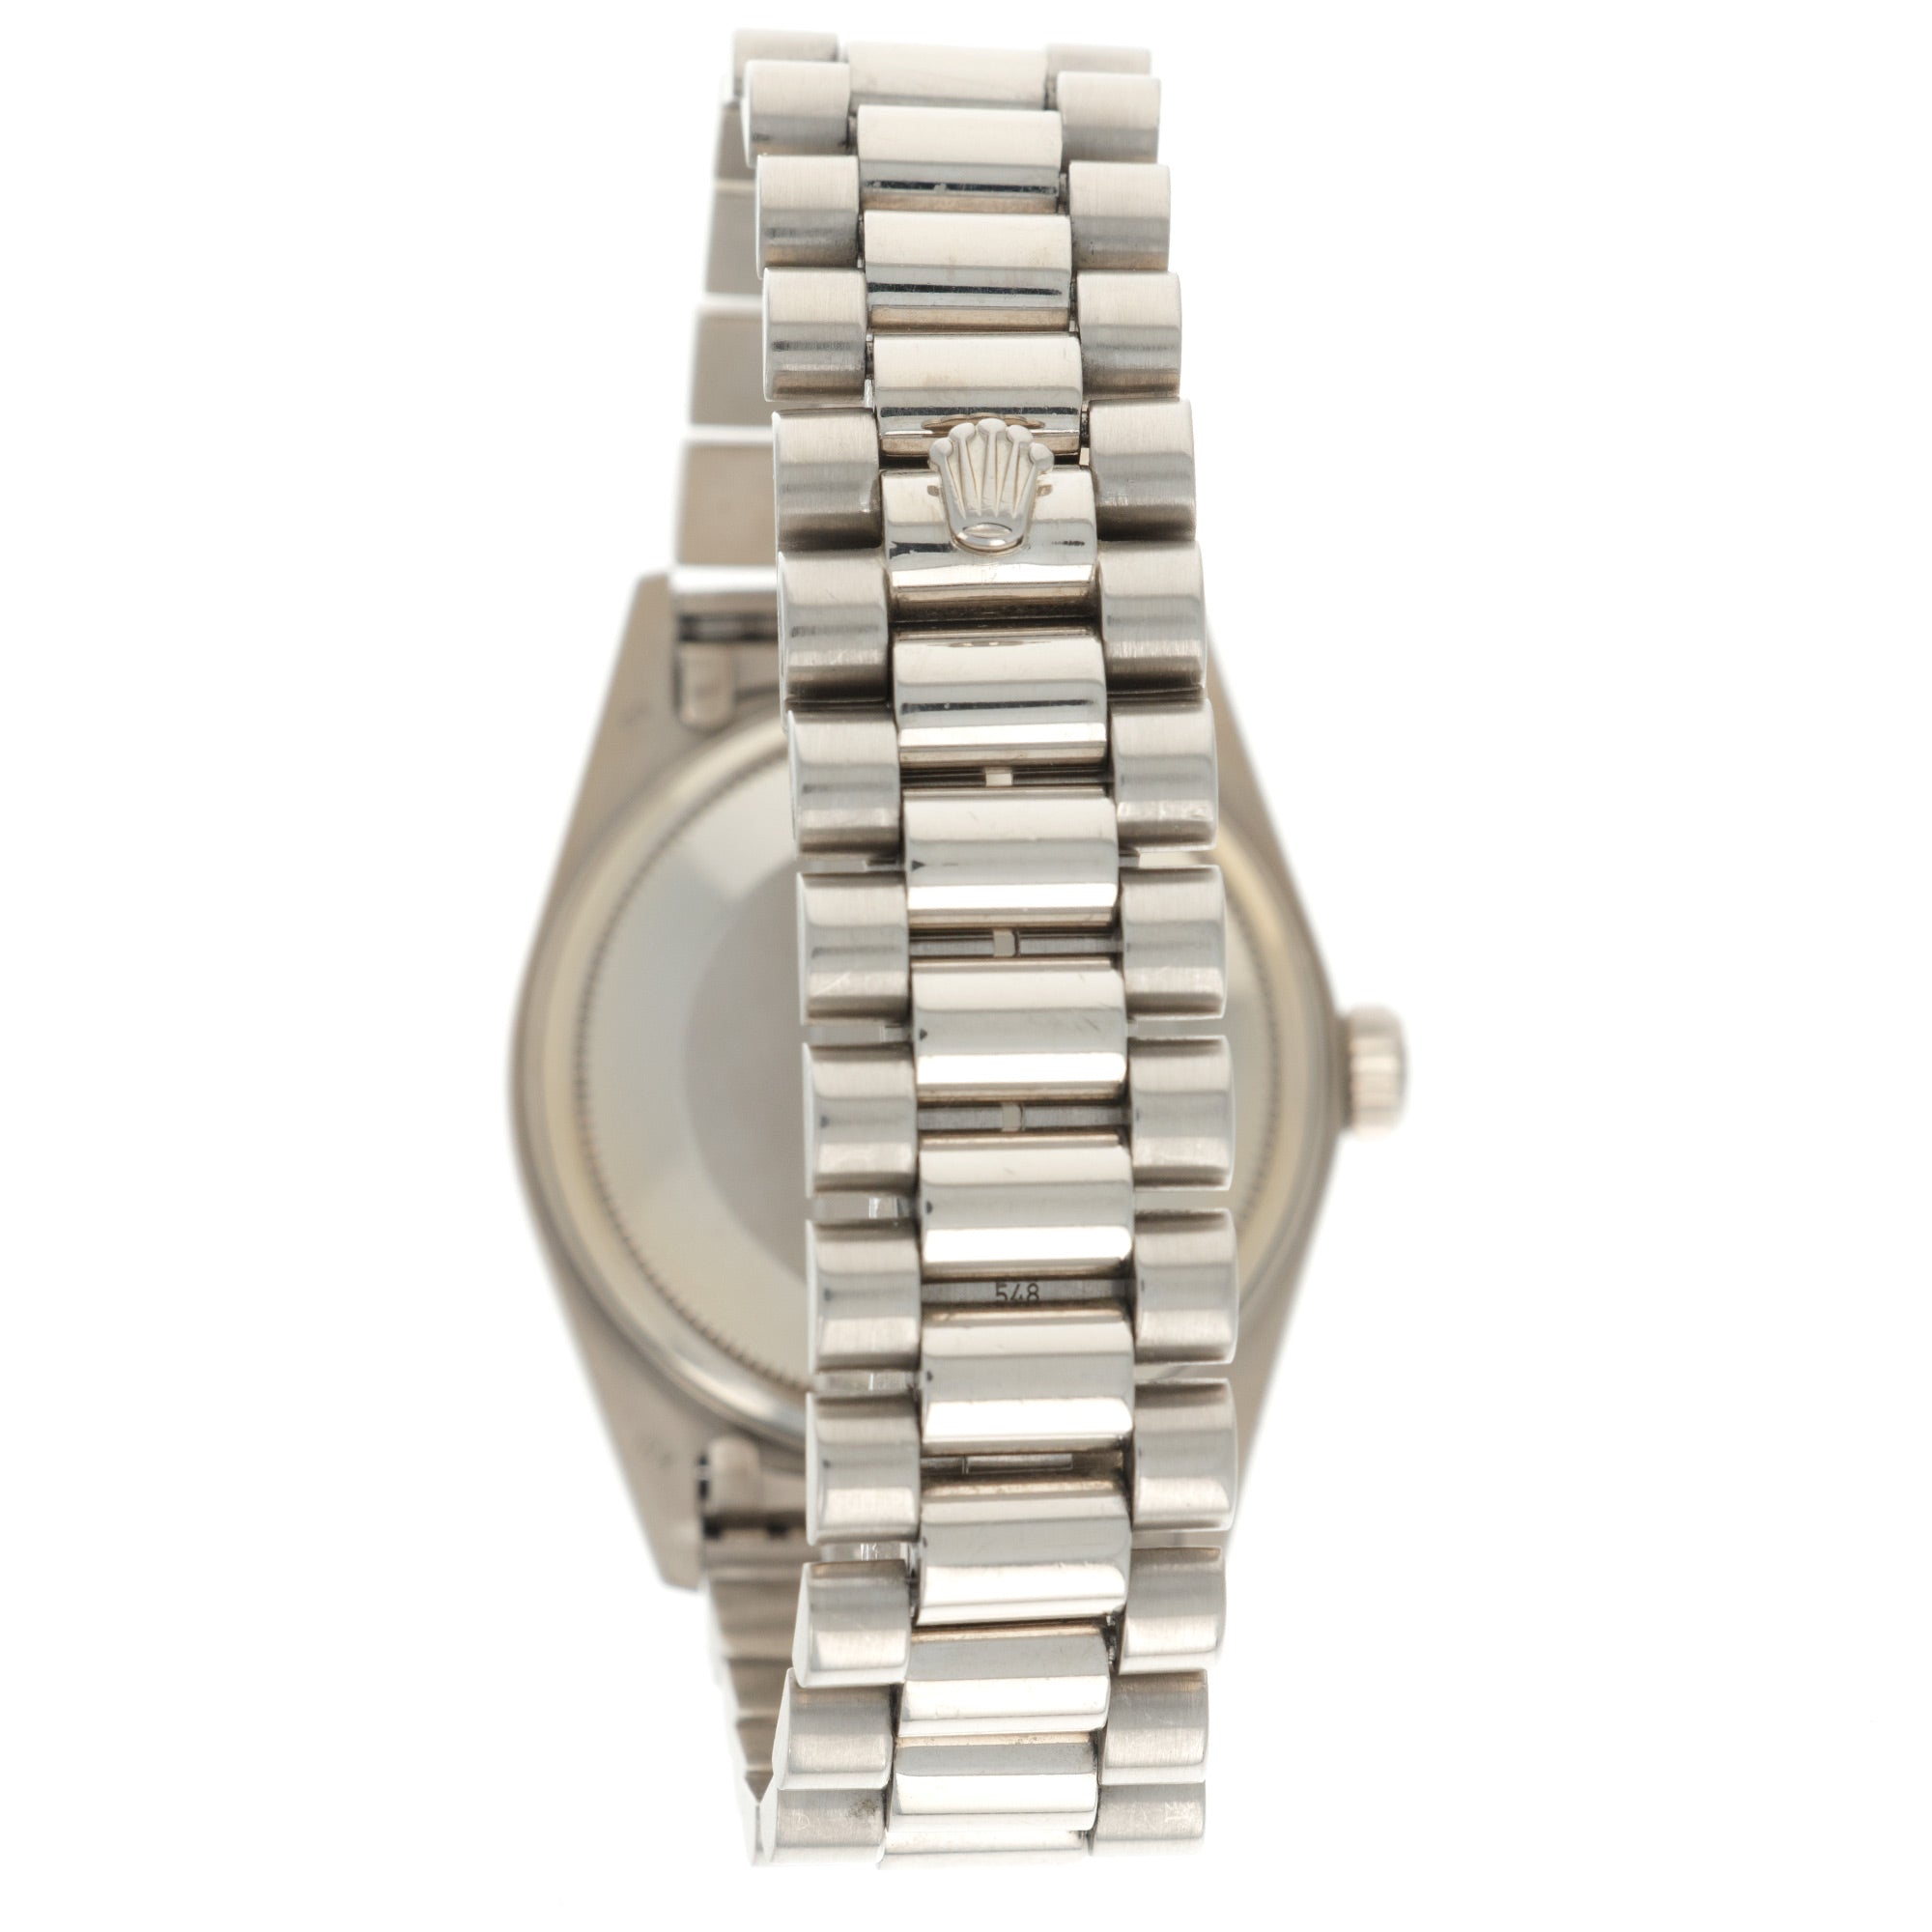 Rolex - Rolex White Gold Day-Date Diamond Watch Ref. 18049 with Original Paper - The Keystone Watches